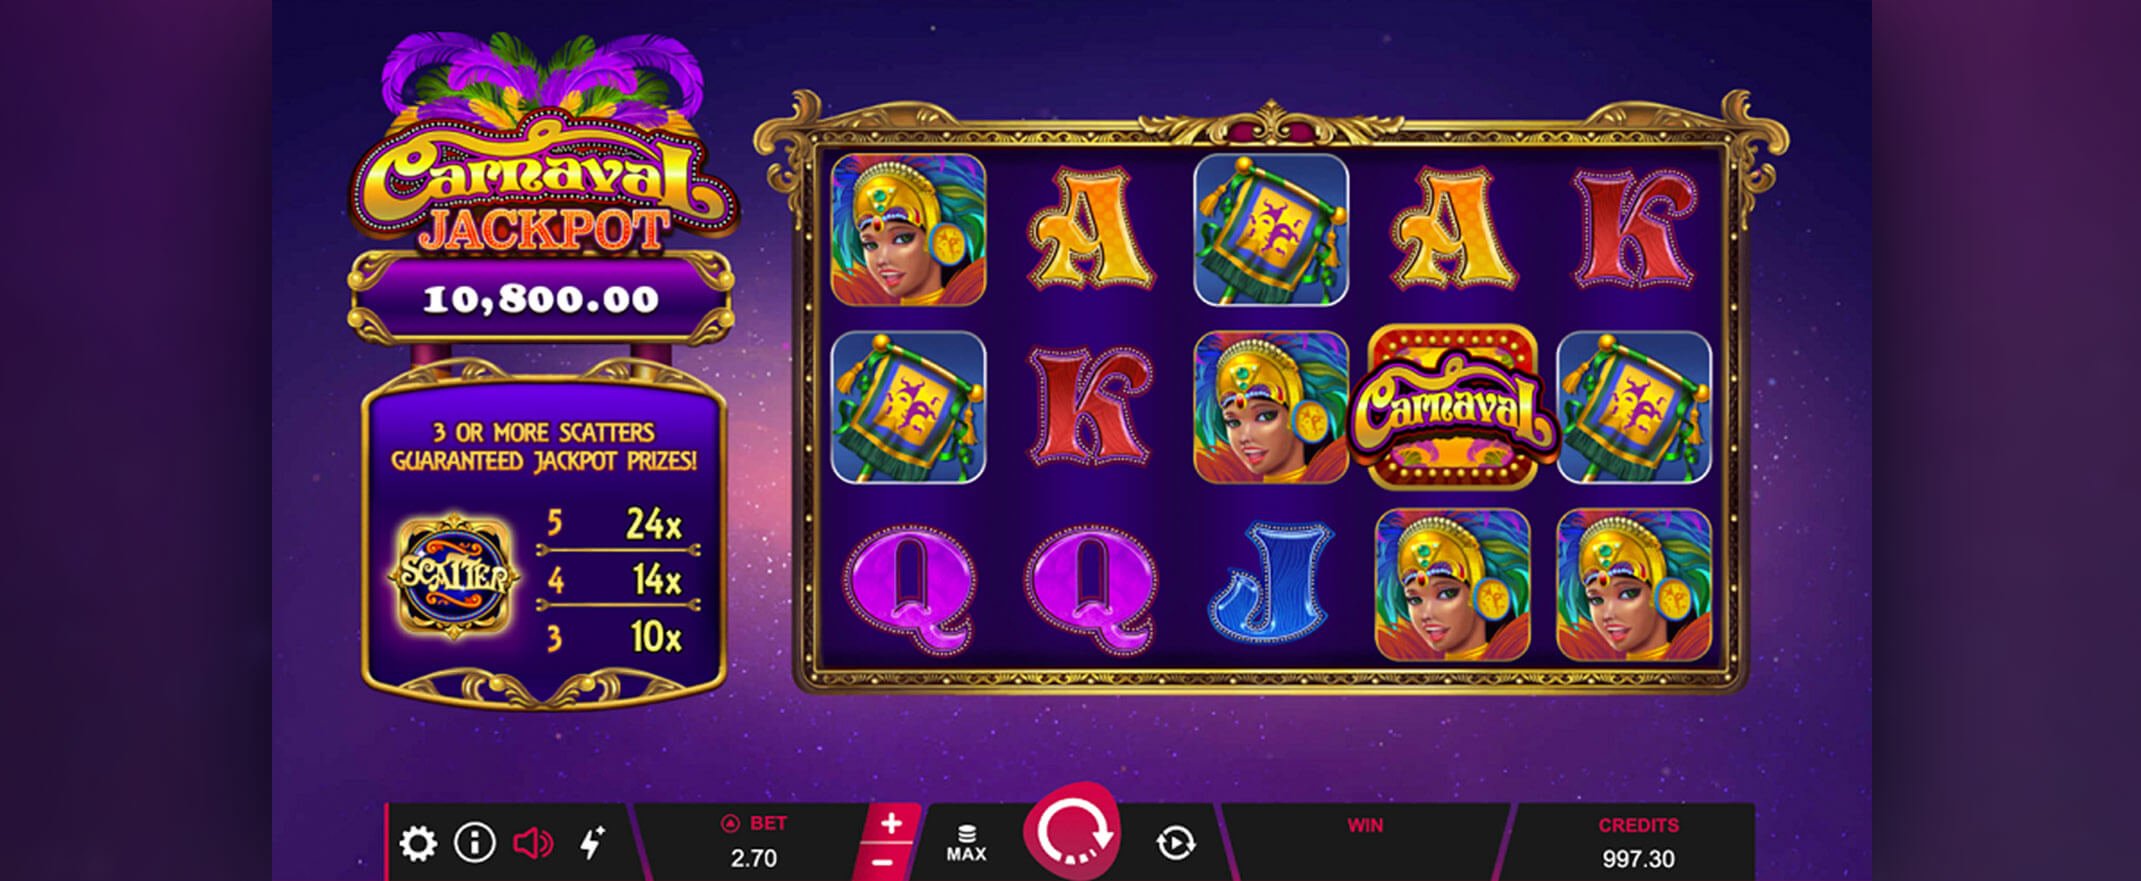 Carnaval Jackpot slot screenshot of the reels